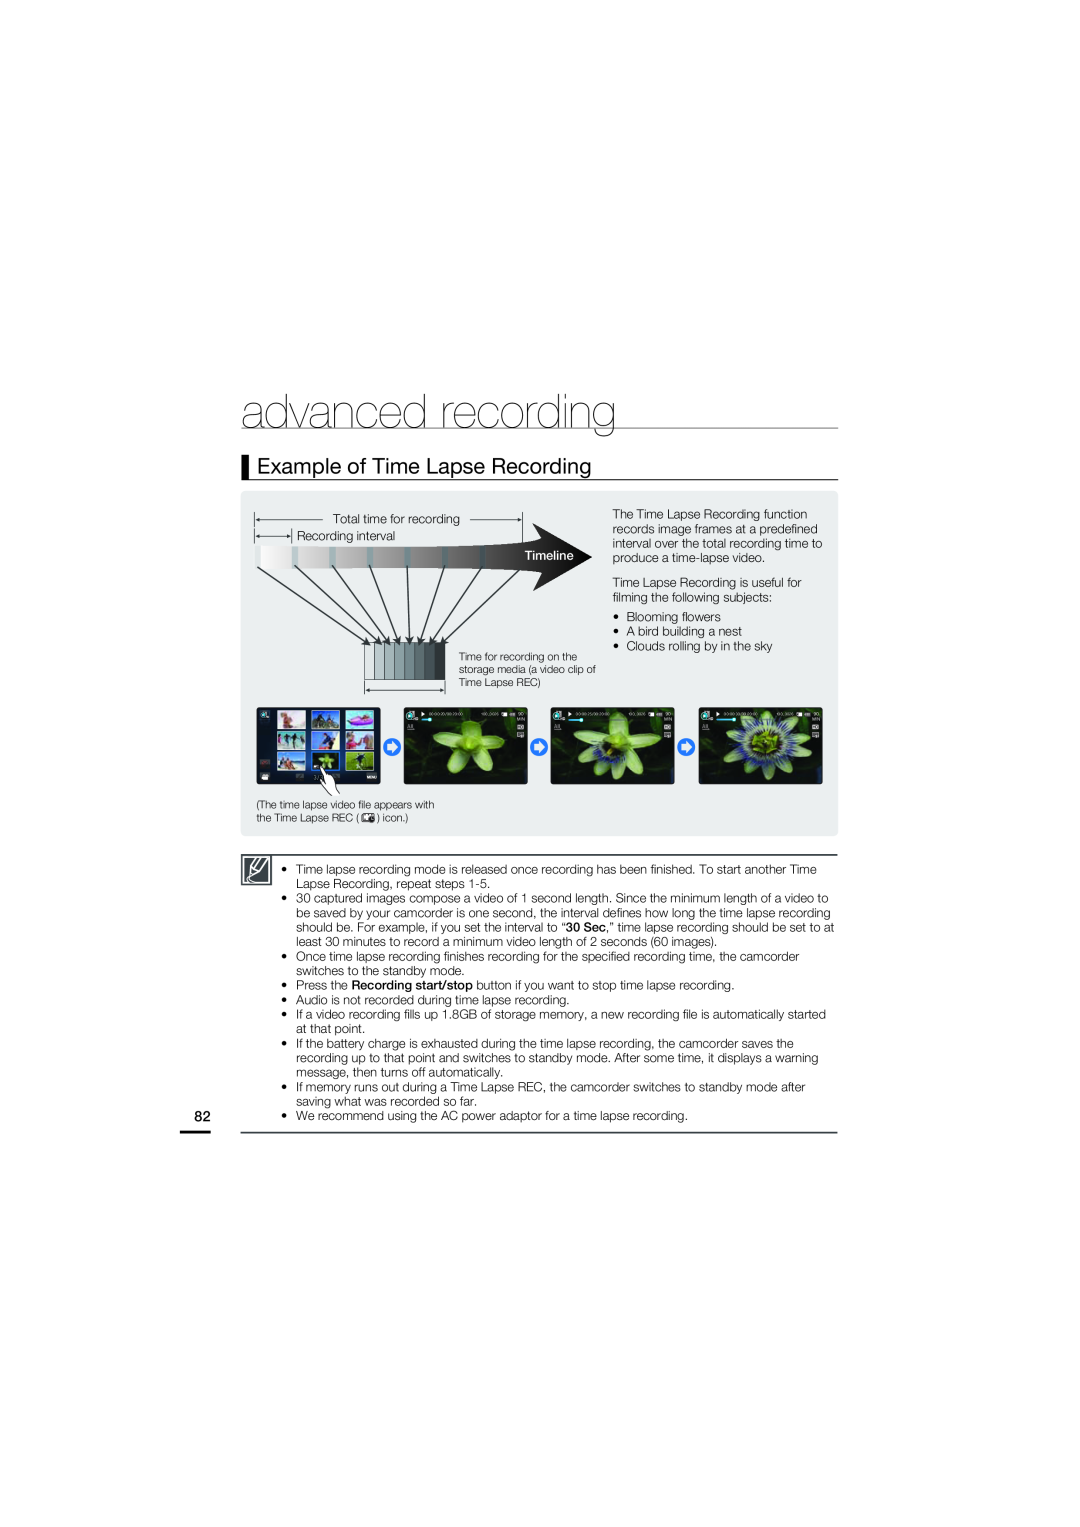 Samsung HMX-S15BN/XAA, HMX-S10BN/XAA manual Example of Time Lapse Recording, advanced recording 